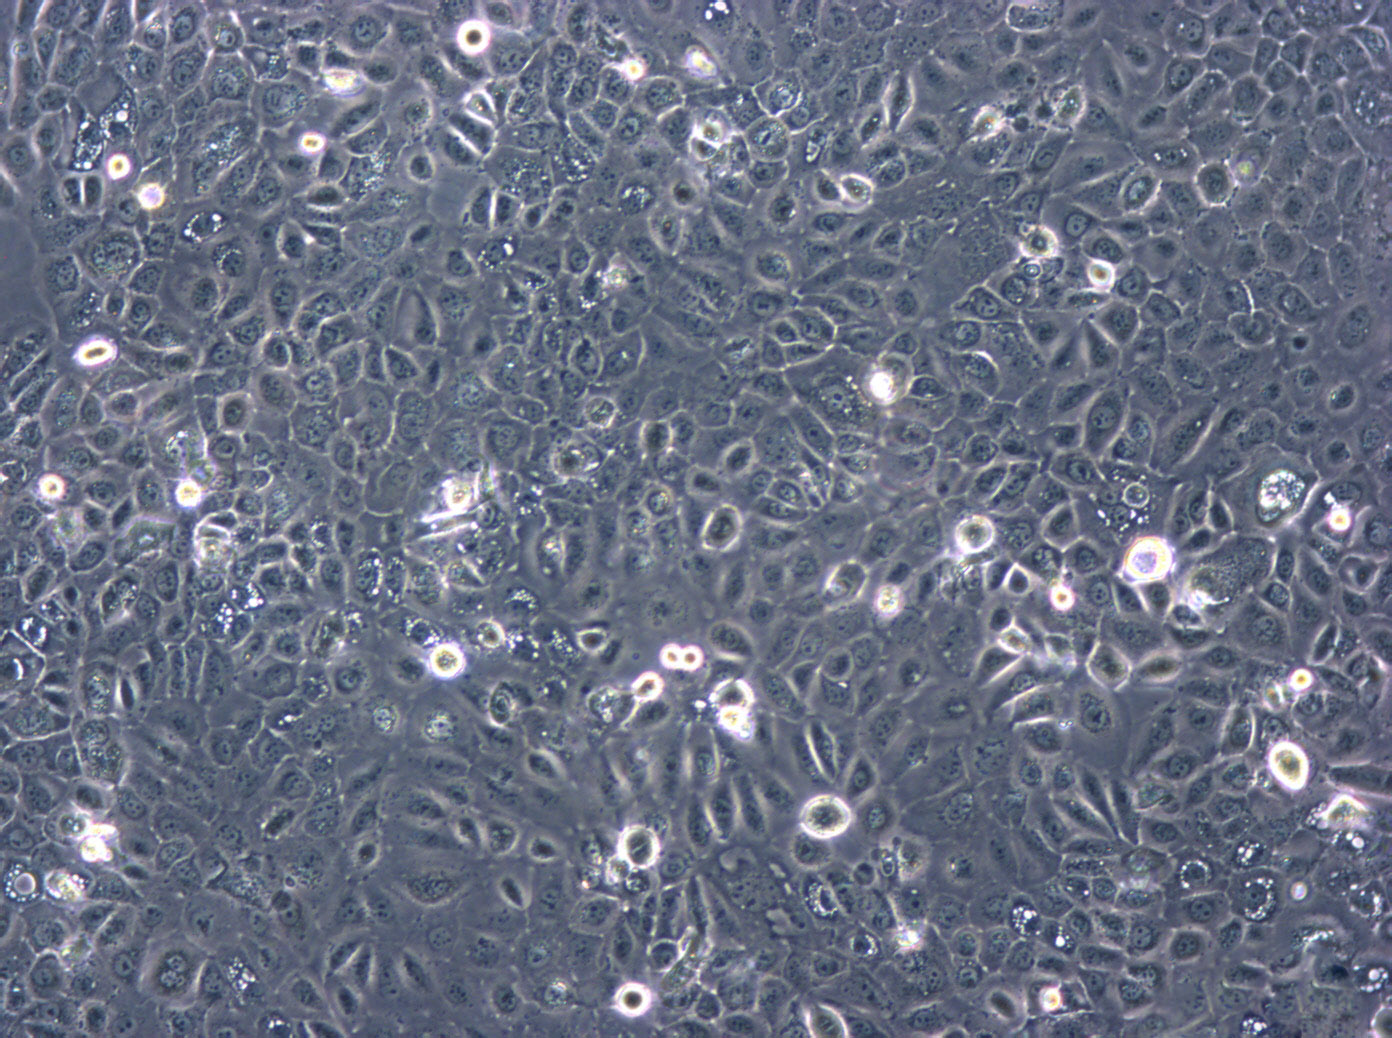 MOLP-2 cell line人多发性骨髓瘤细胞系,MOLP-2 cell line